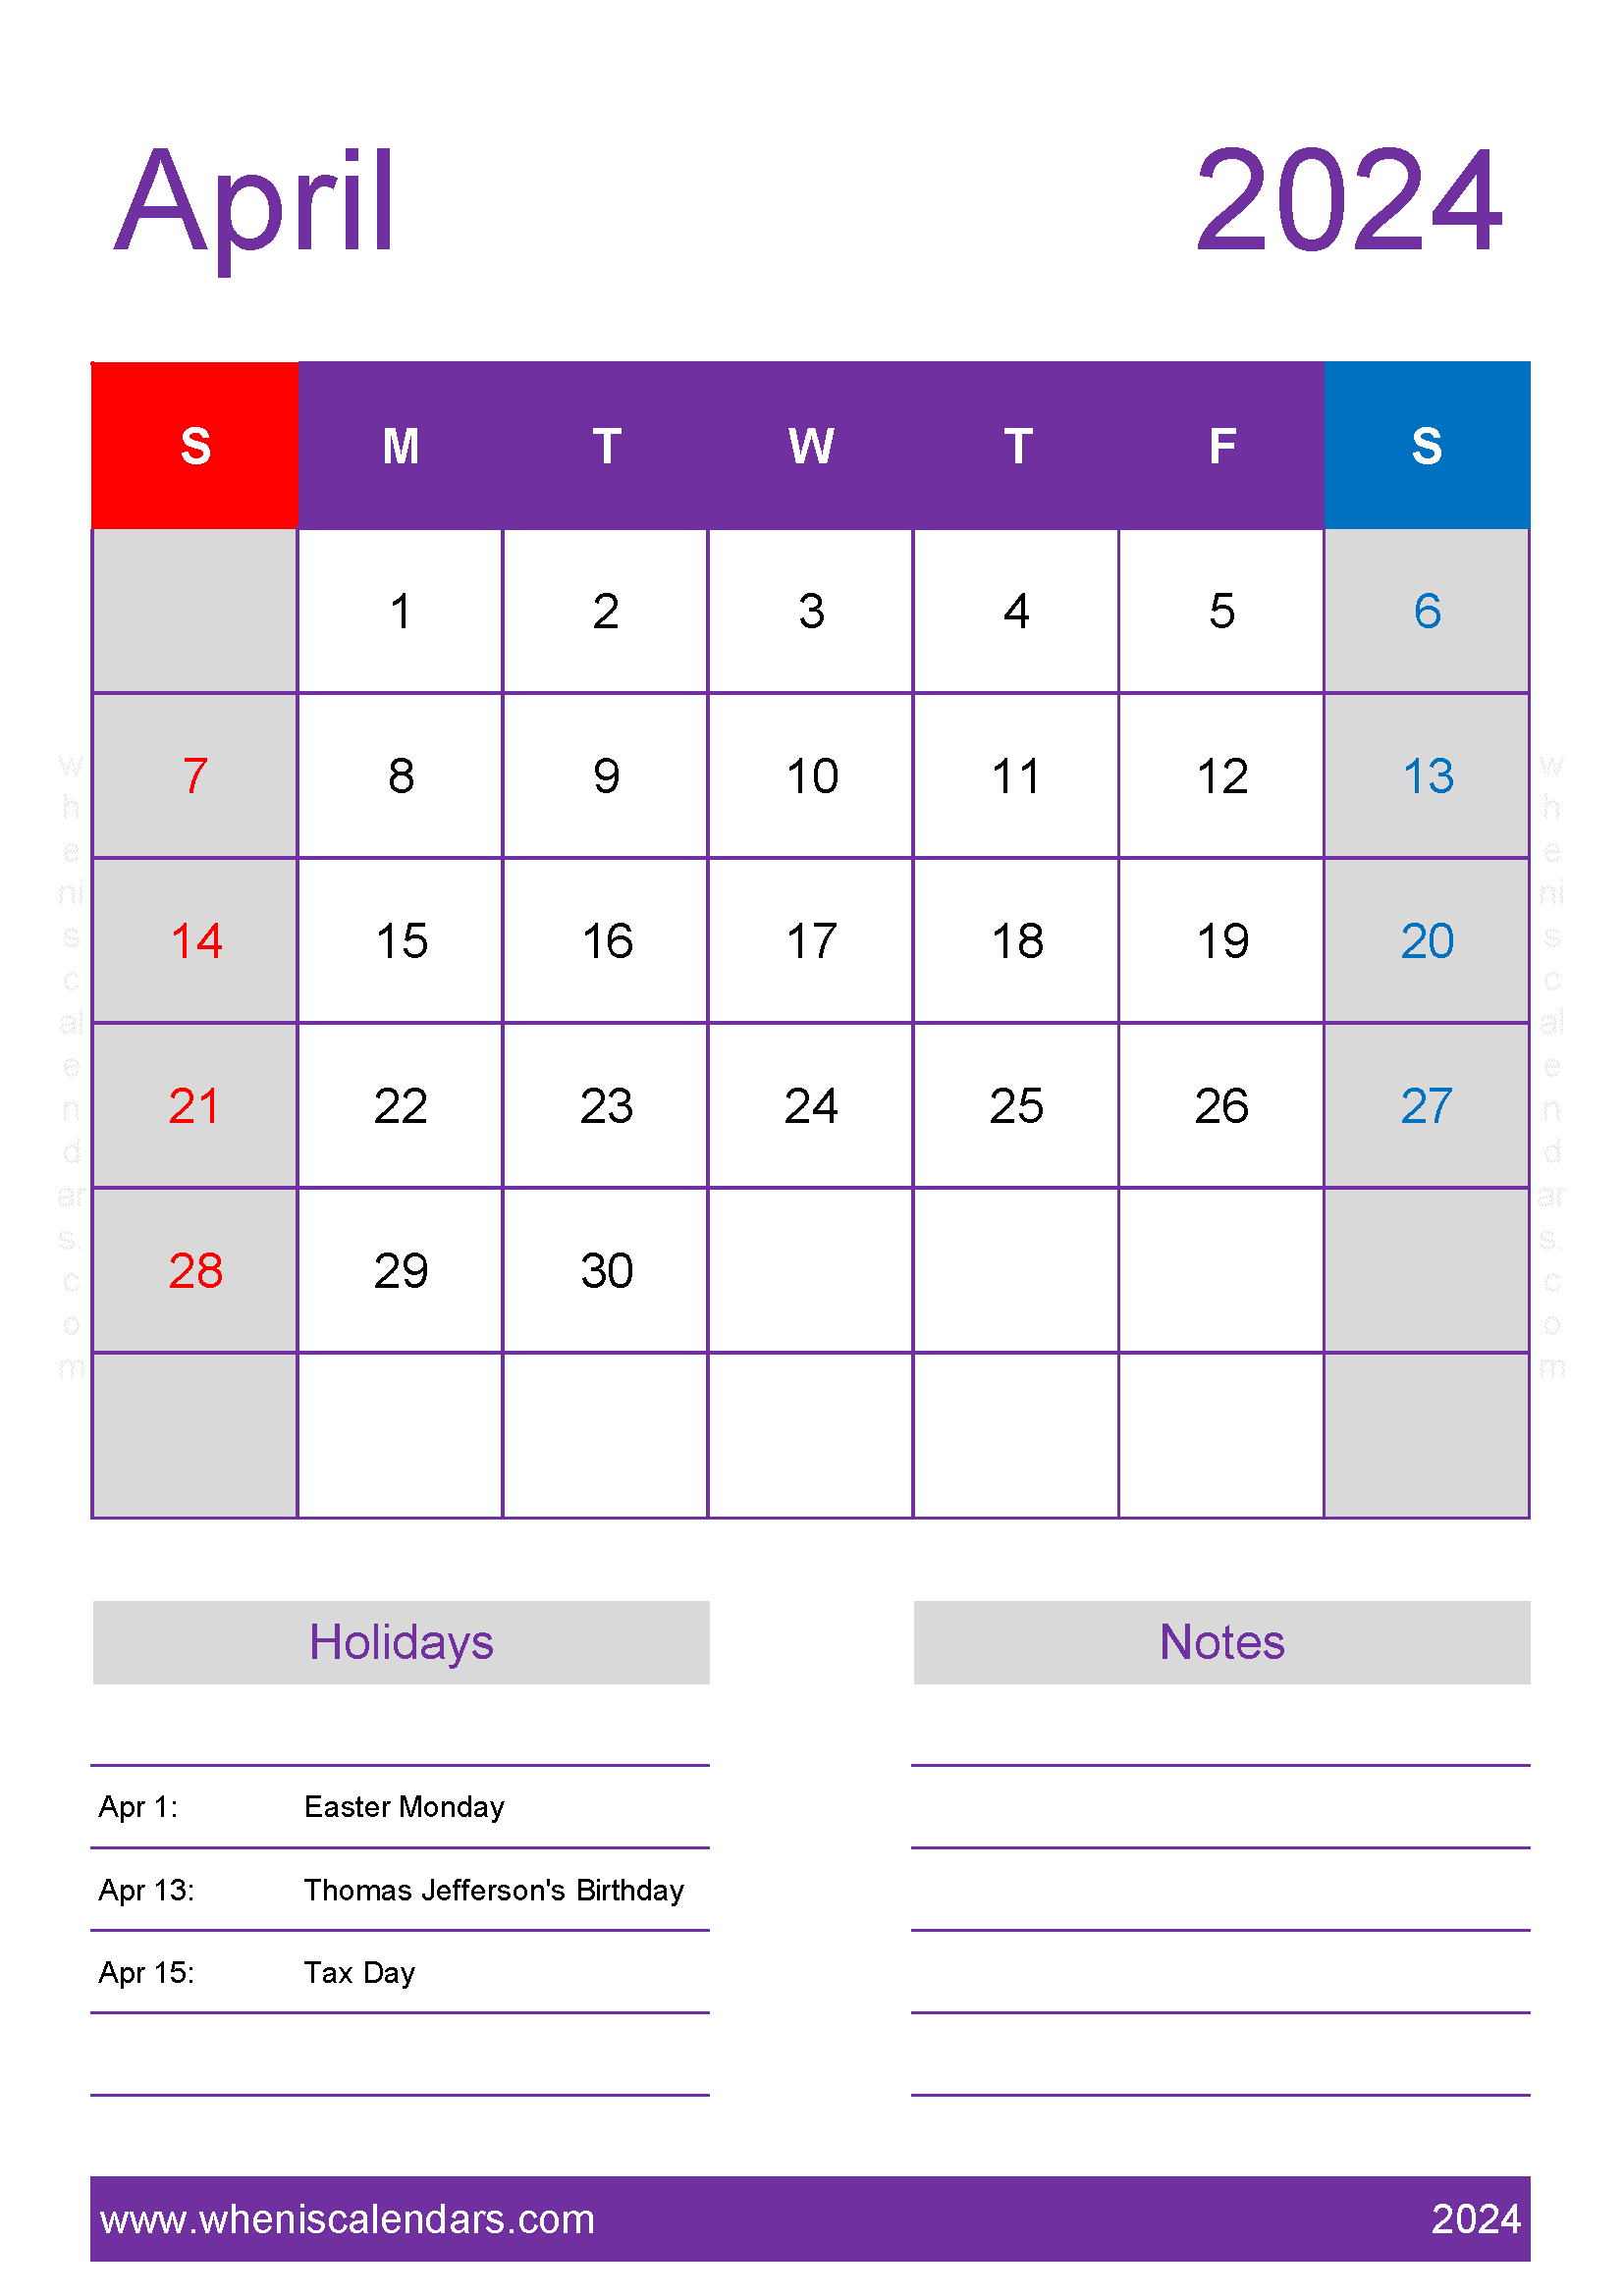 April 2024 Calendar in excel Monthly Calendar